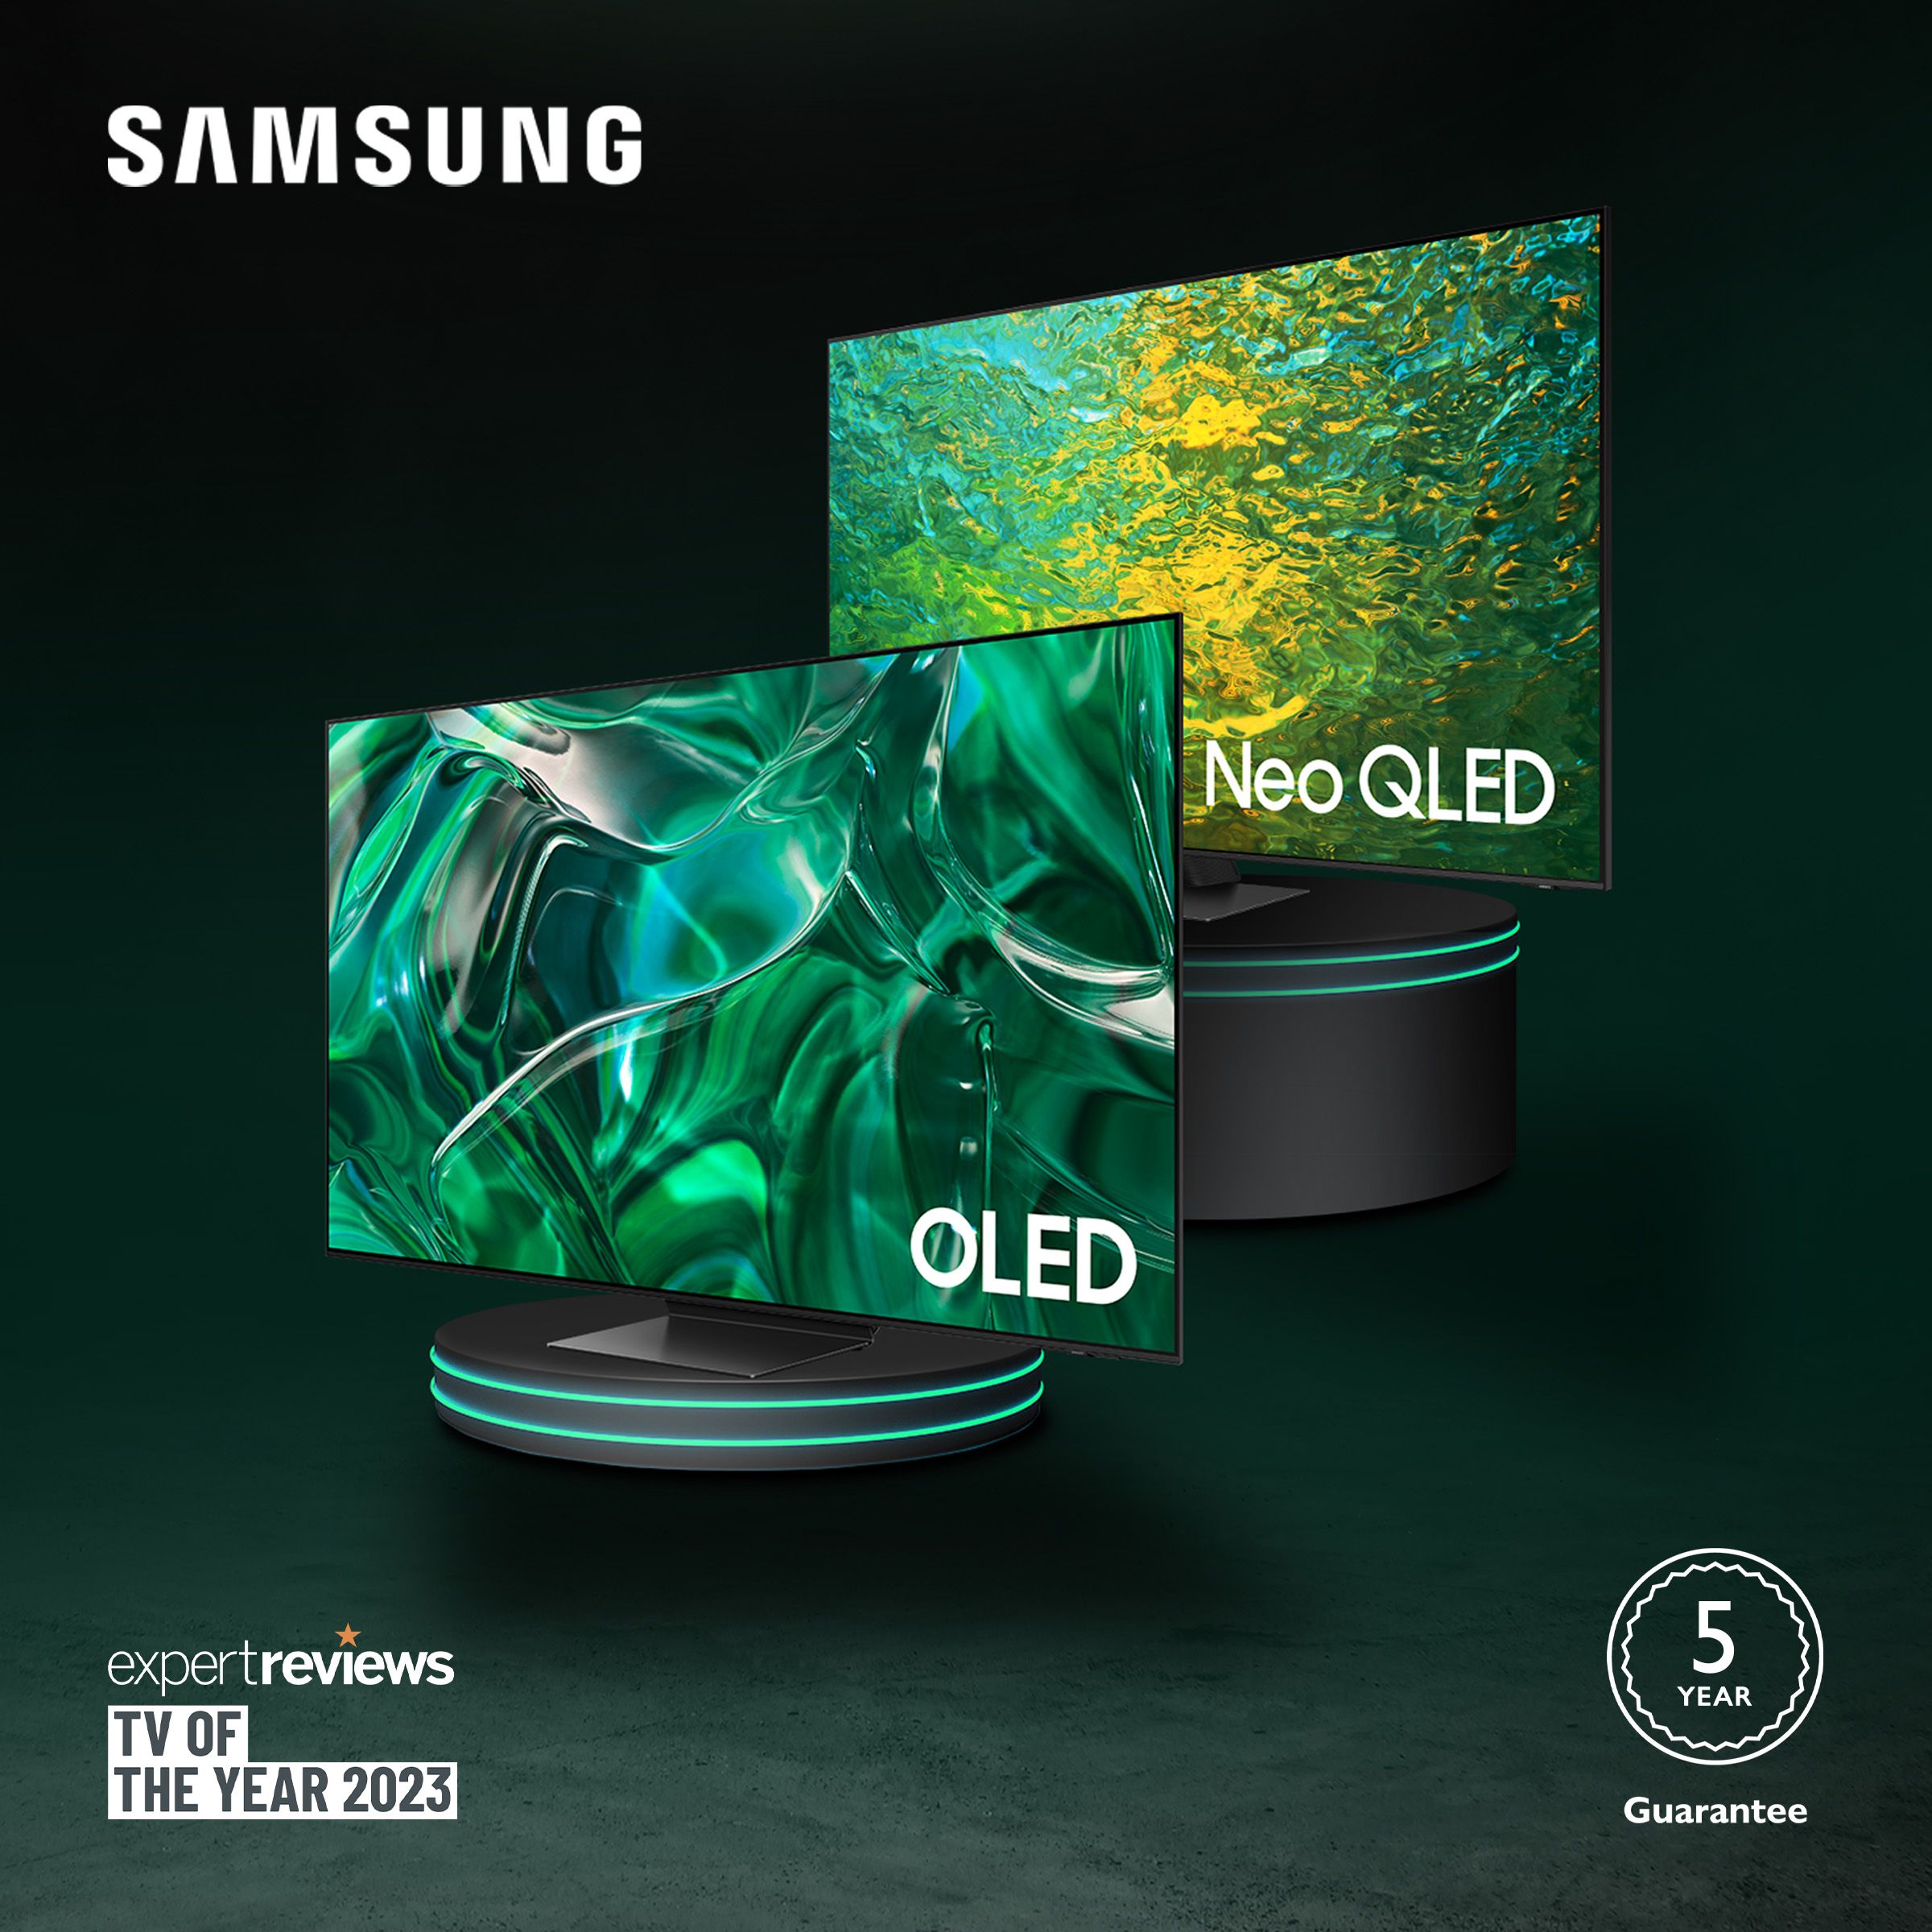 Discover Samsung's award-winning OLED TV range